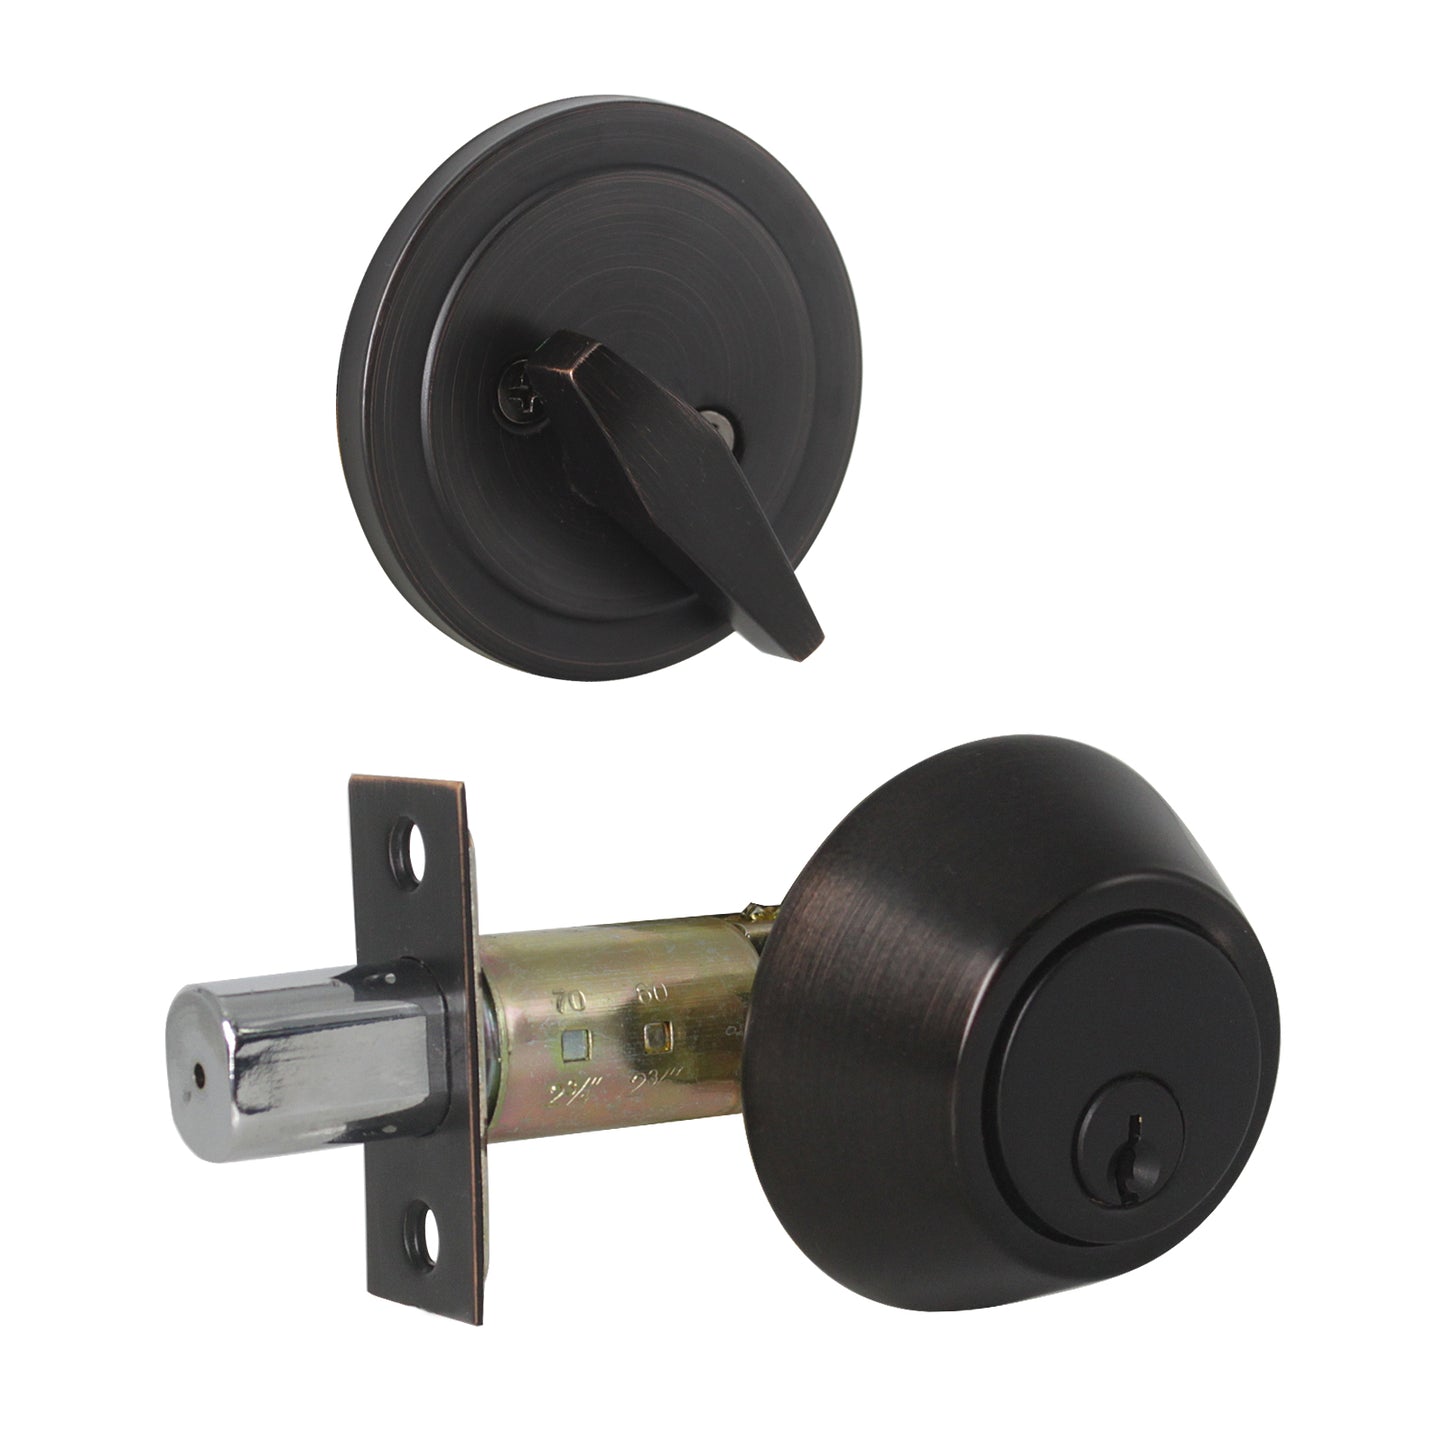 Oil Rubbed Bronze Finish Single Cylinder Deadbolt Lock - Keyed Alike DLD101ORBDB - Probrico